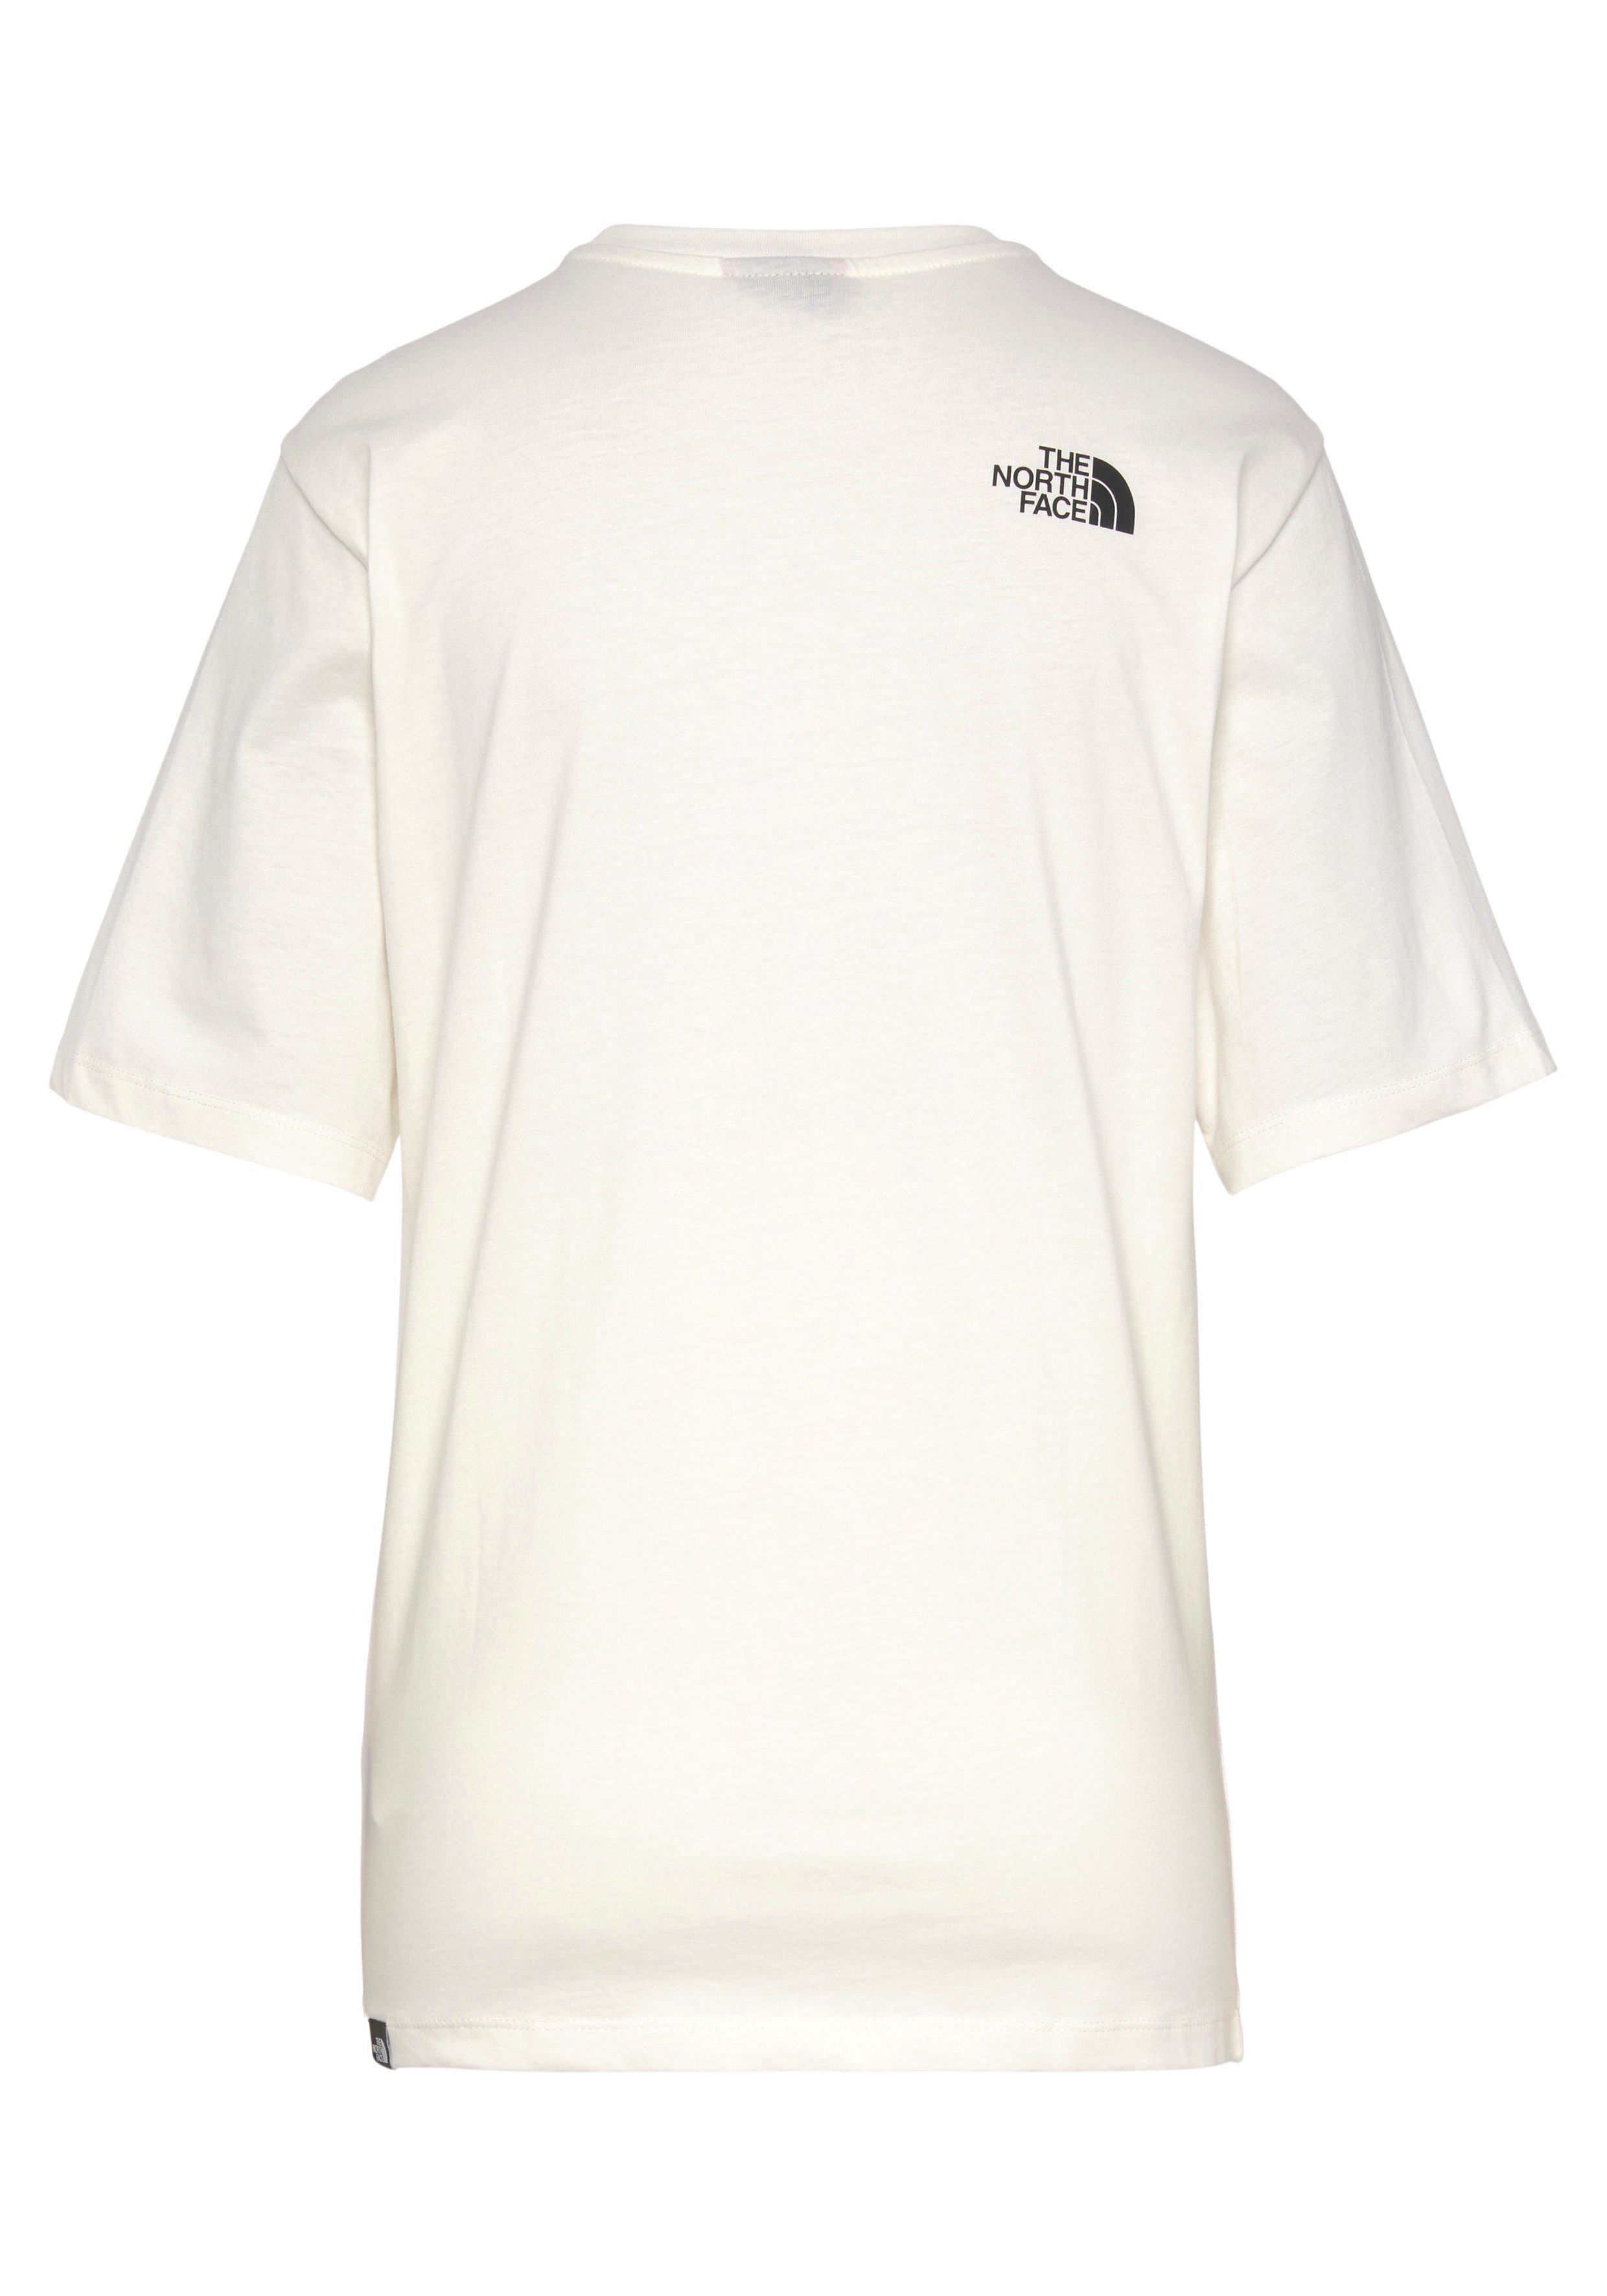 The North Face T-Shirt W auf white Brust Logodruck TEE RELAXED mit EASY der